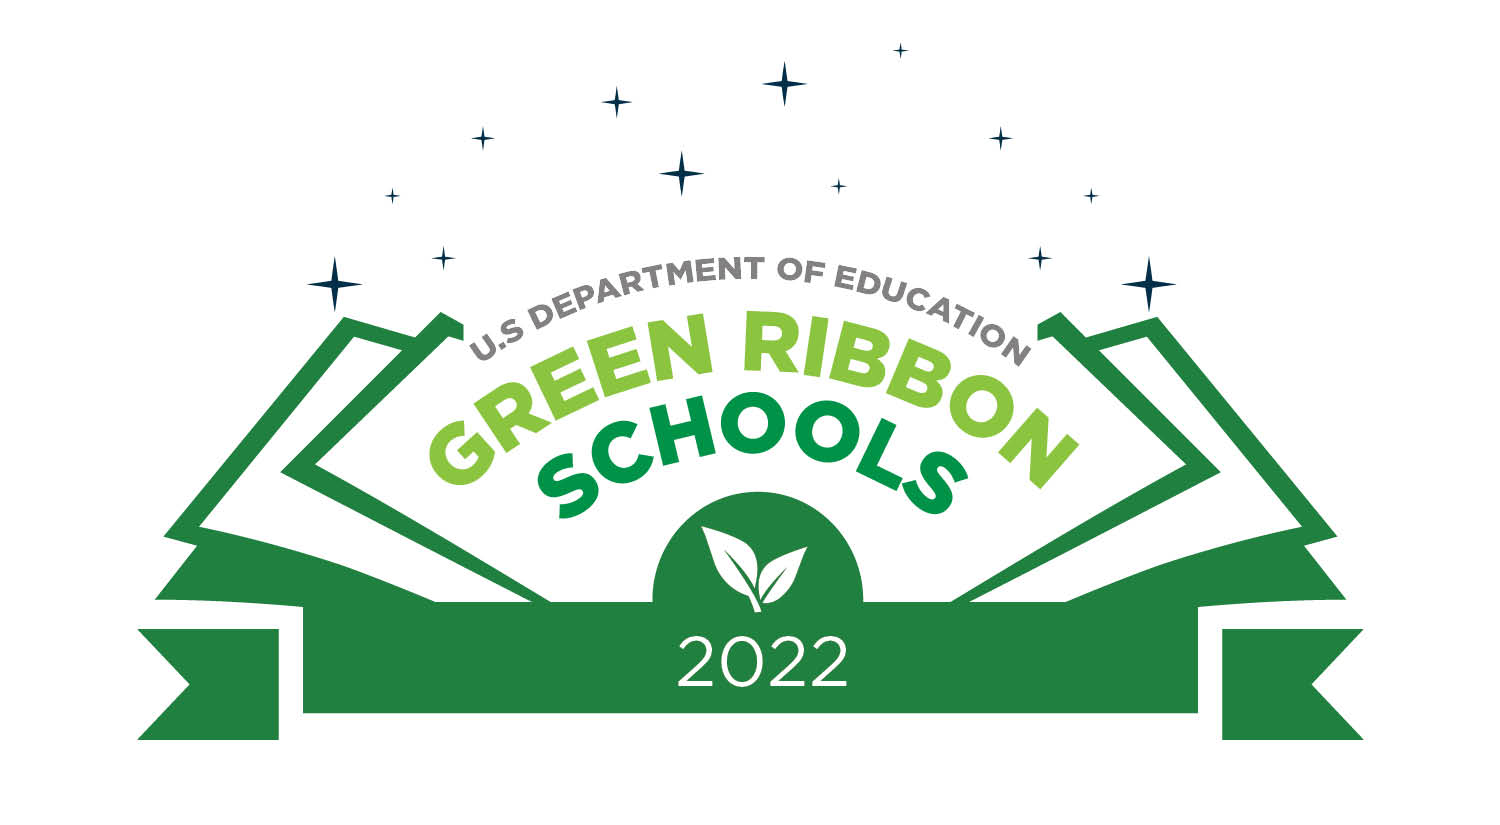 2022-edgrs-logo-year-specific.jpg